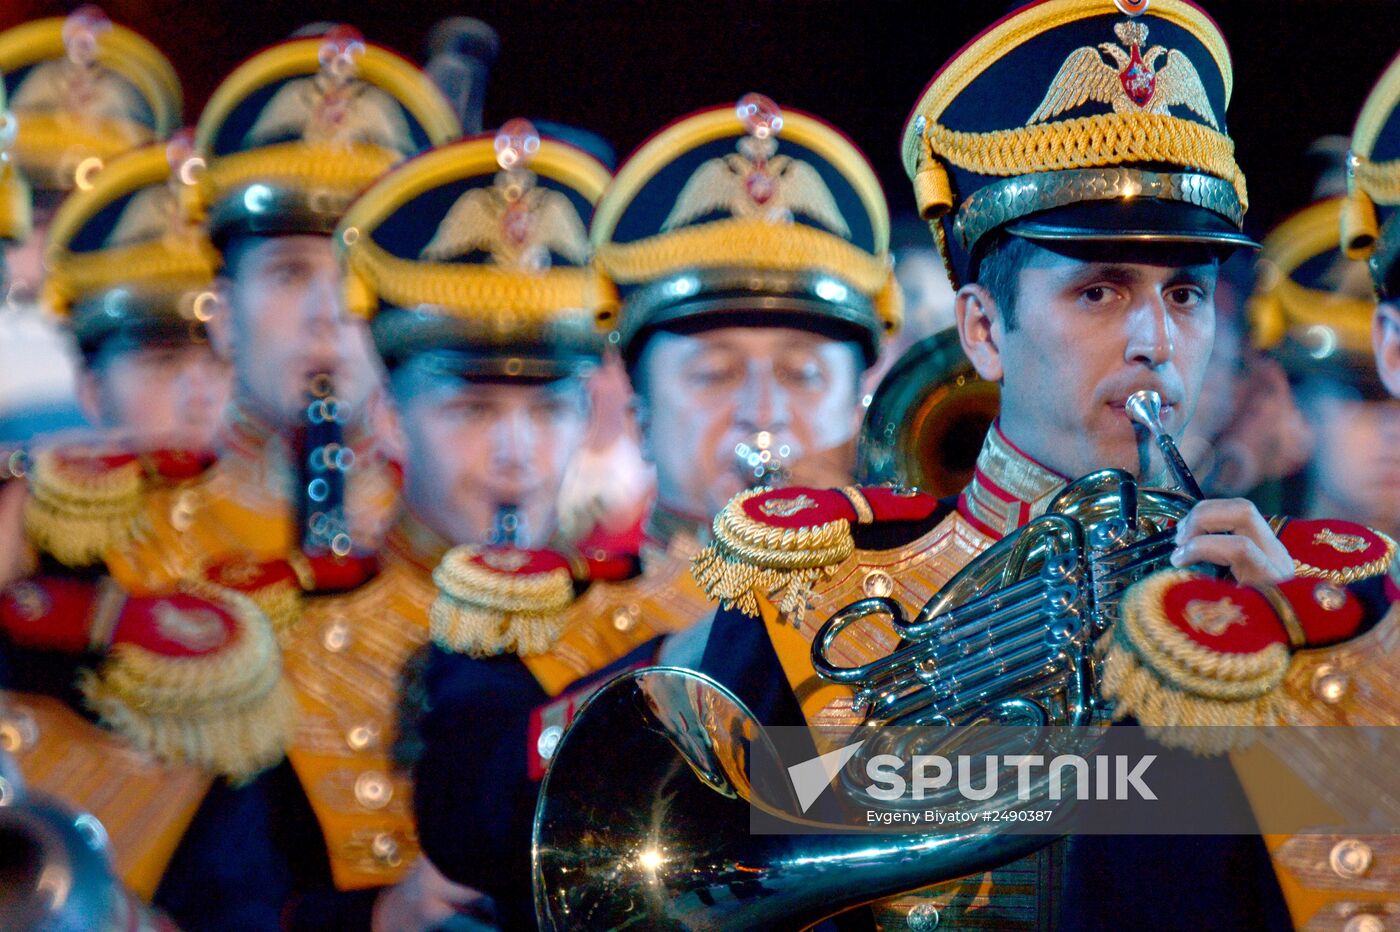 Closing ceremony of 2014 Spasskaya Tower festival